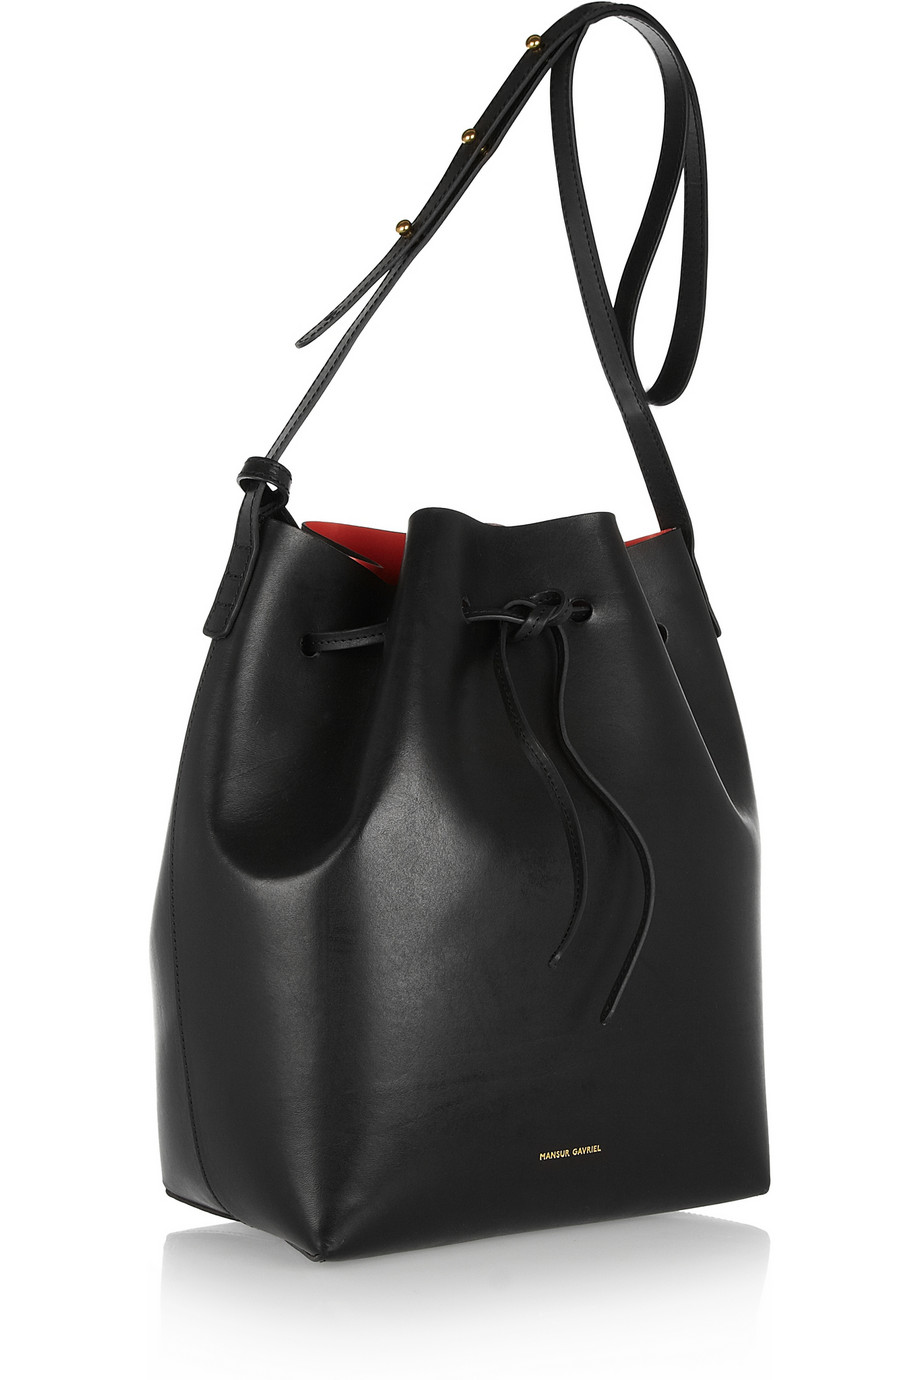 Lyst - Mansur Gavriel Leather Bucket Bag in Black